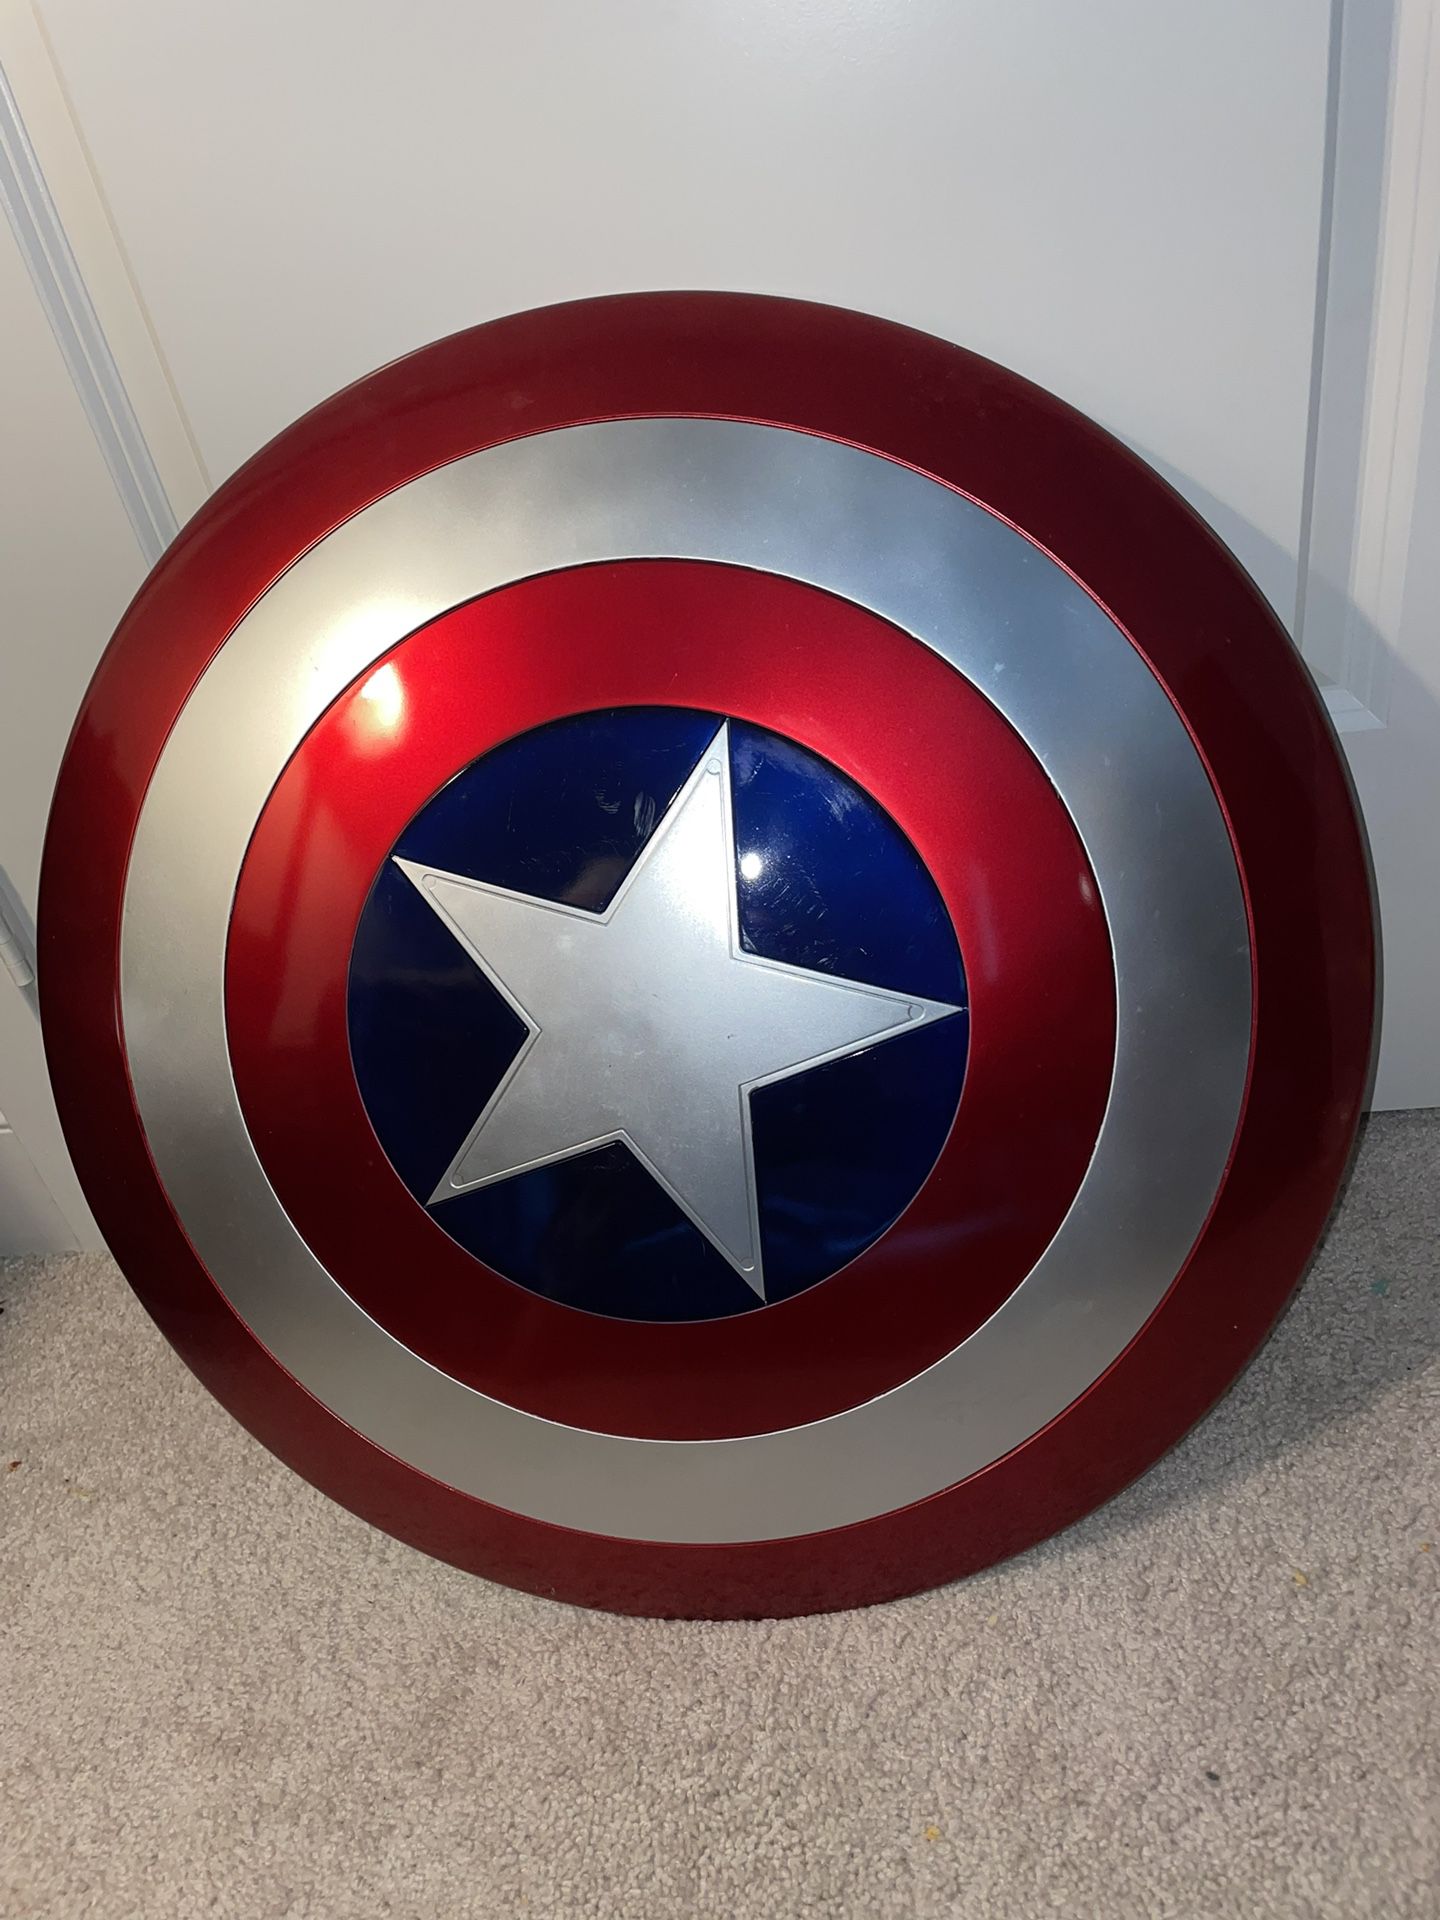 Captain America Adult Shield 